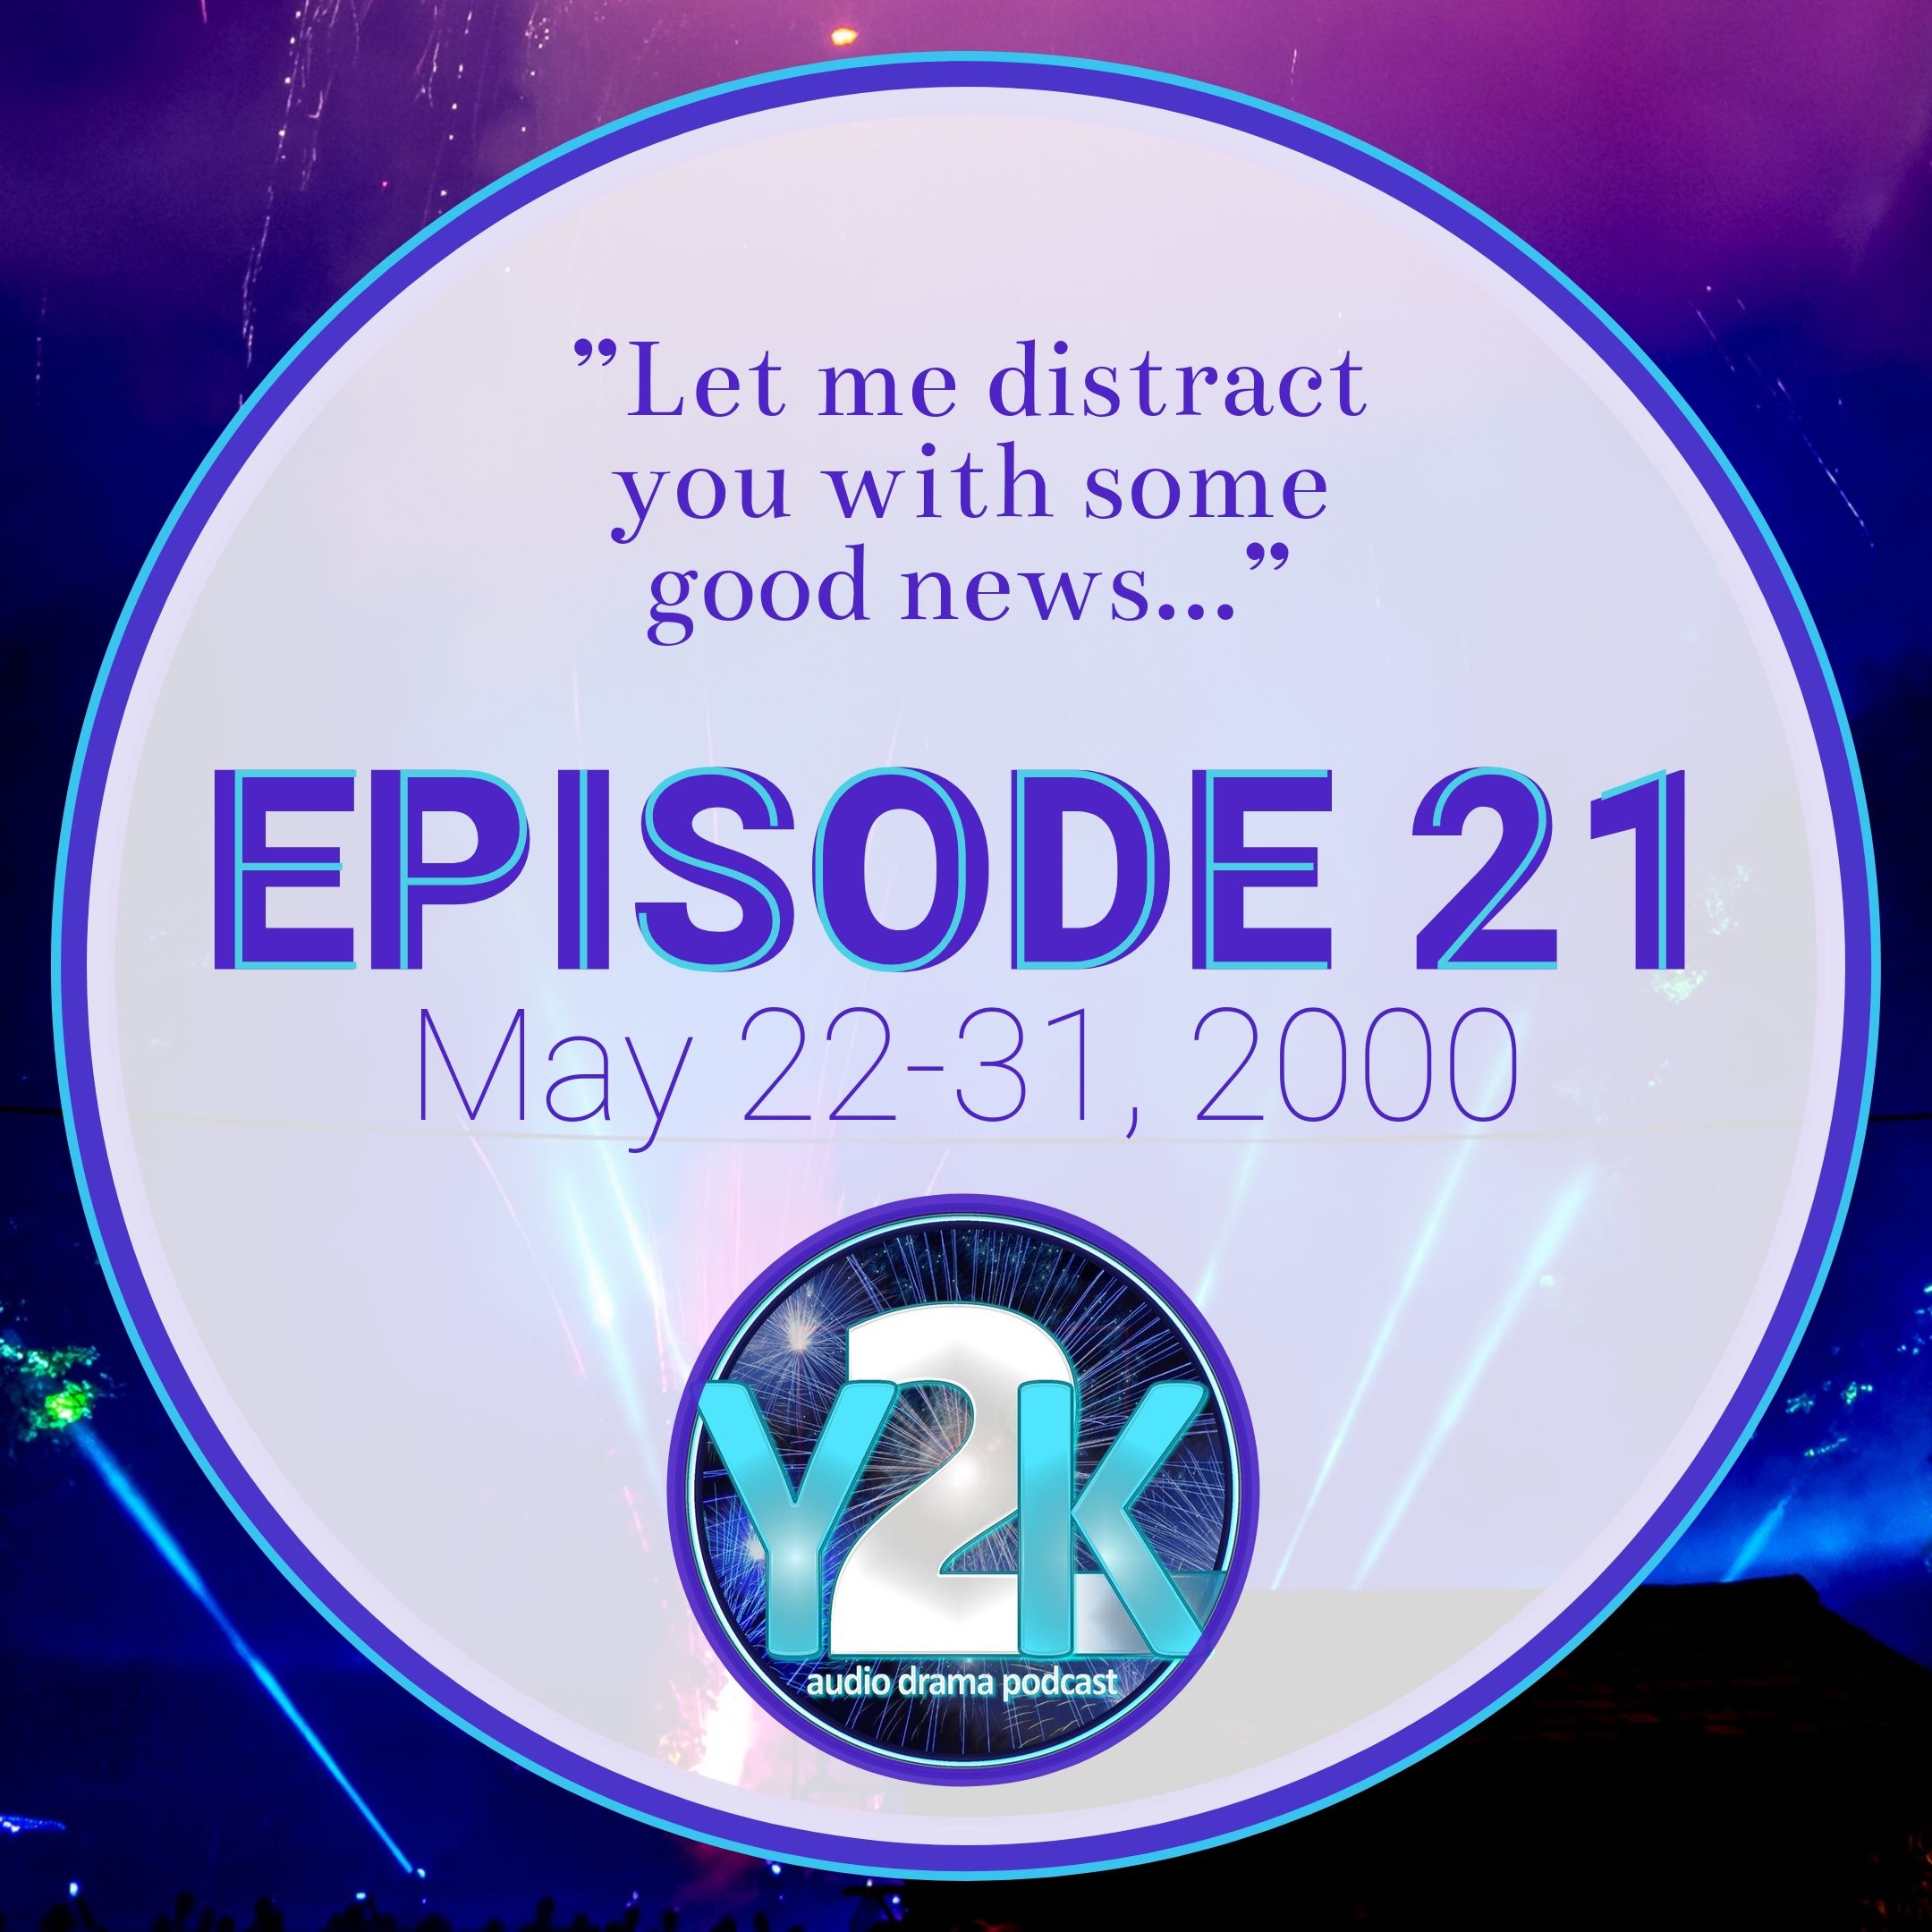 "Y2K Audio Drama" Podcast